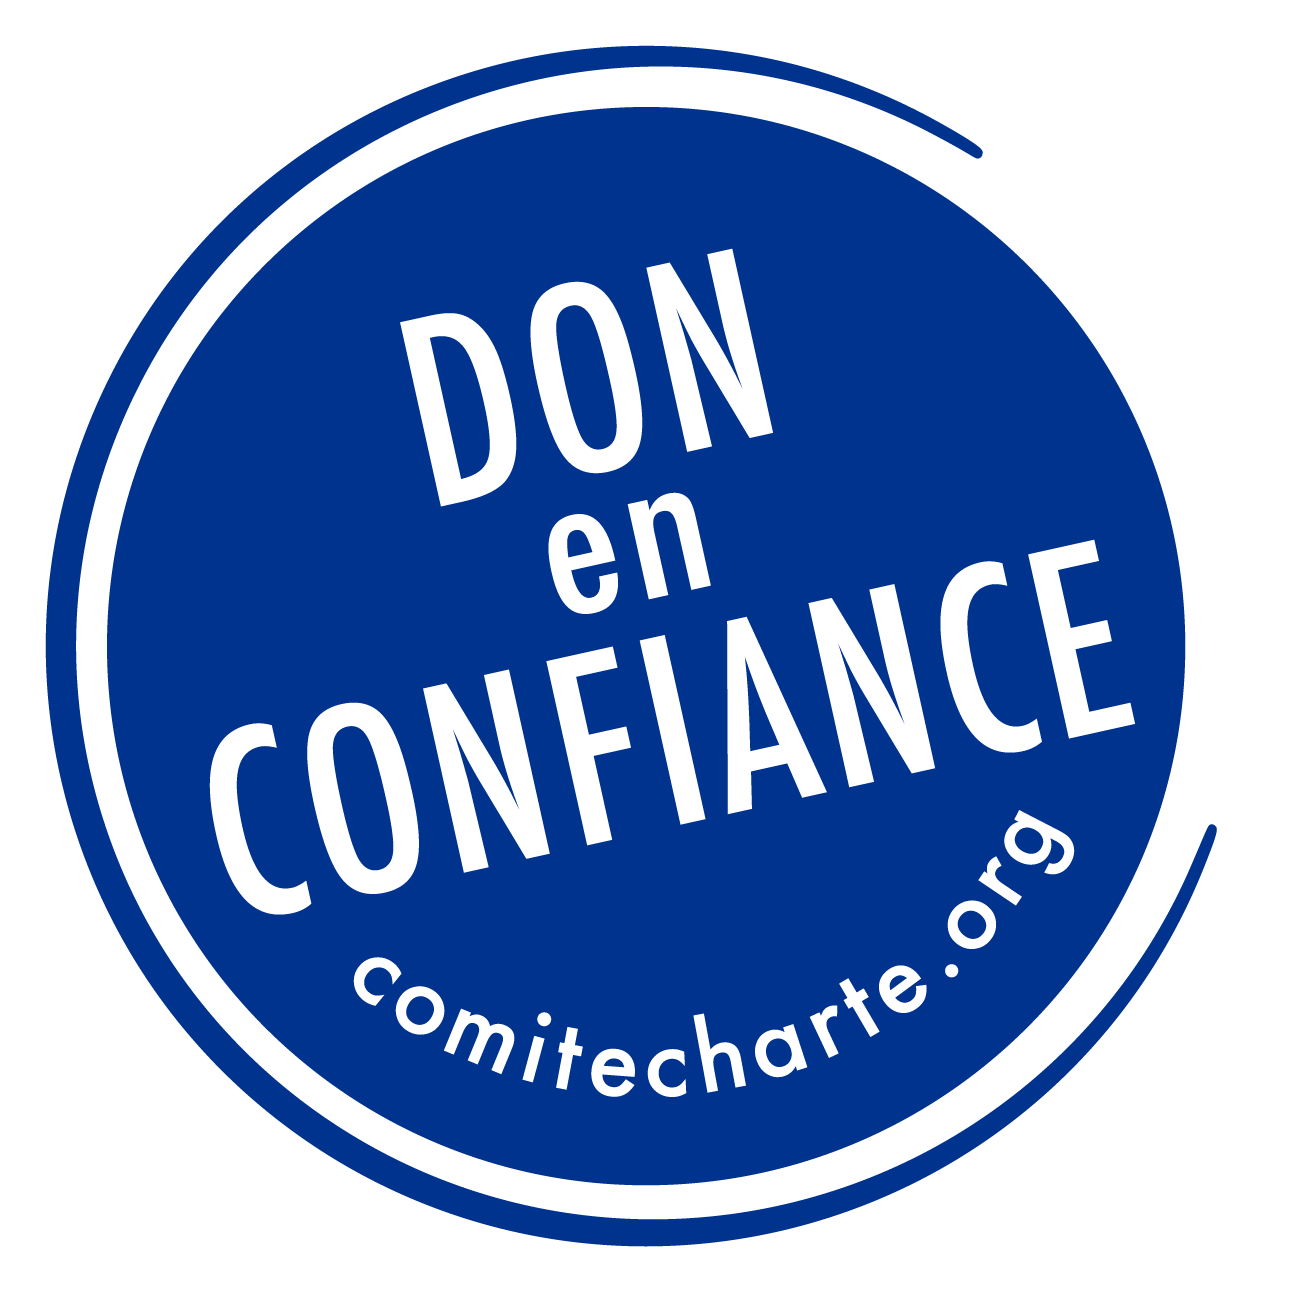 ComiteCharte_Don_logo_RVB